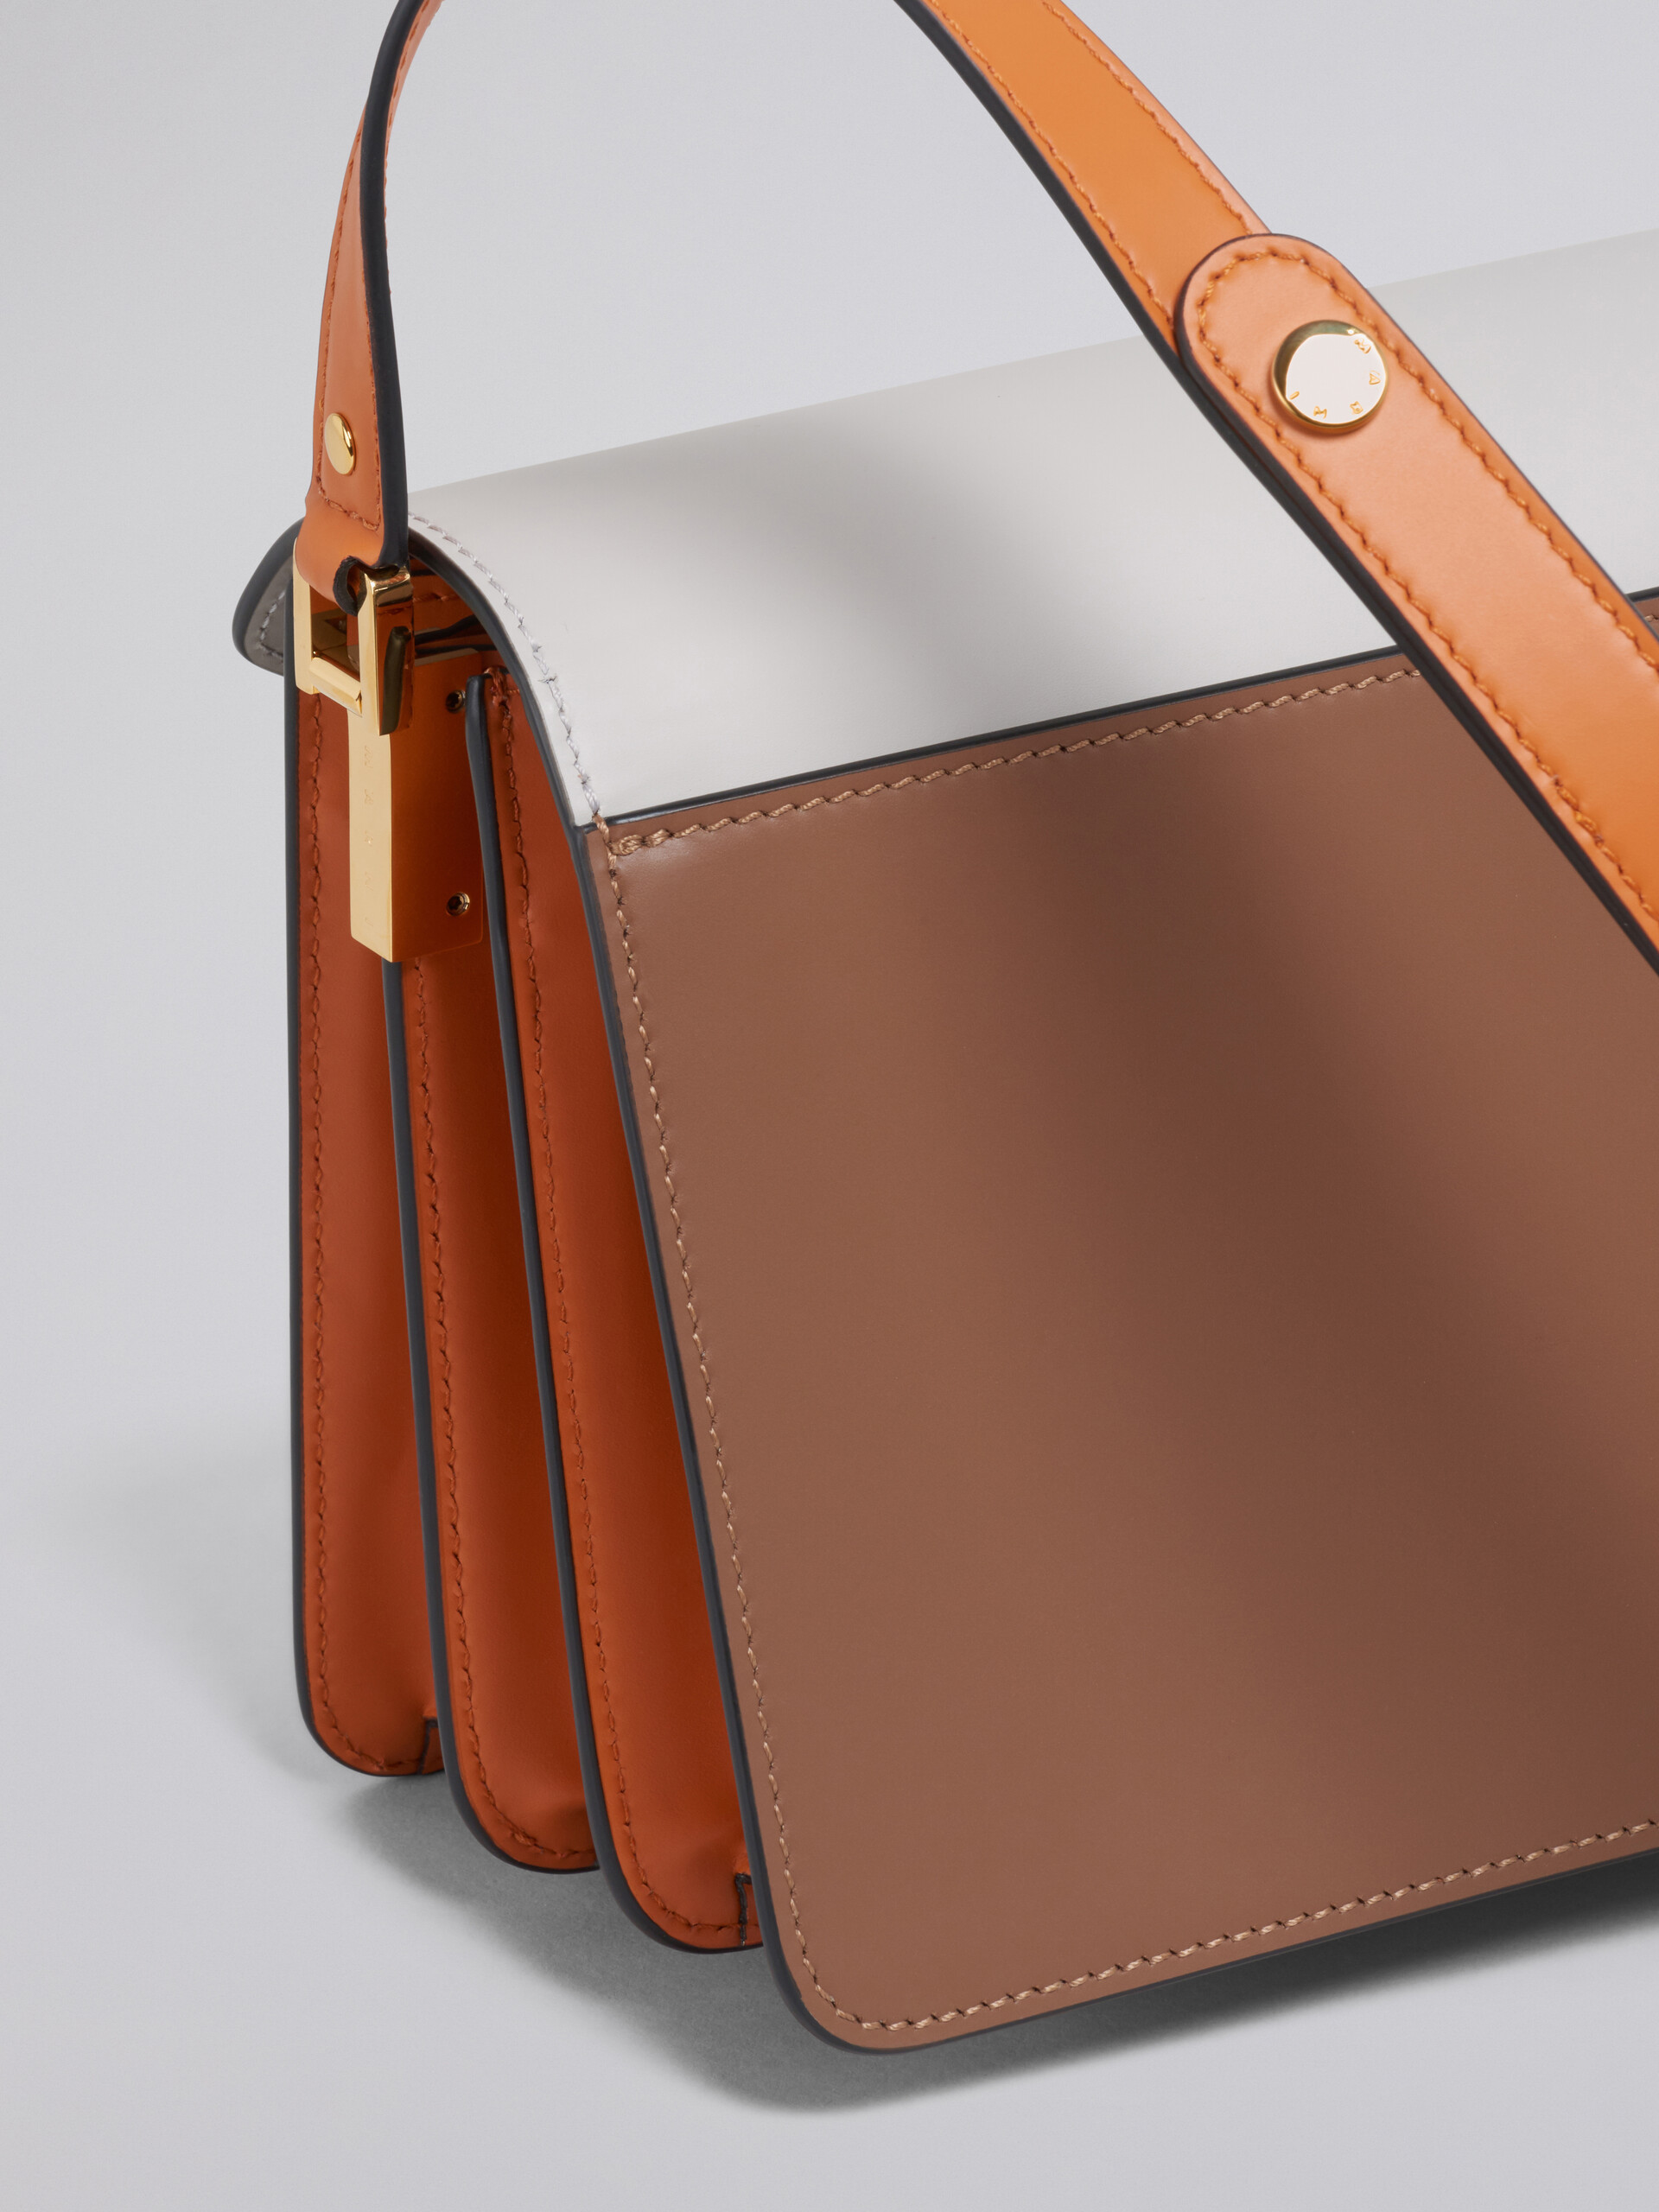 TRUNK medium bag in grey brown and orange leather - Shoulder Bags - Image 4